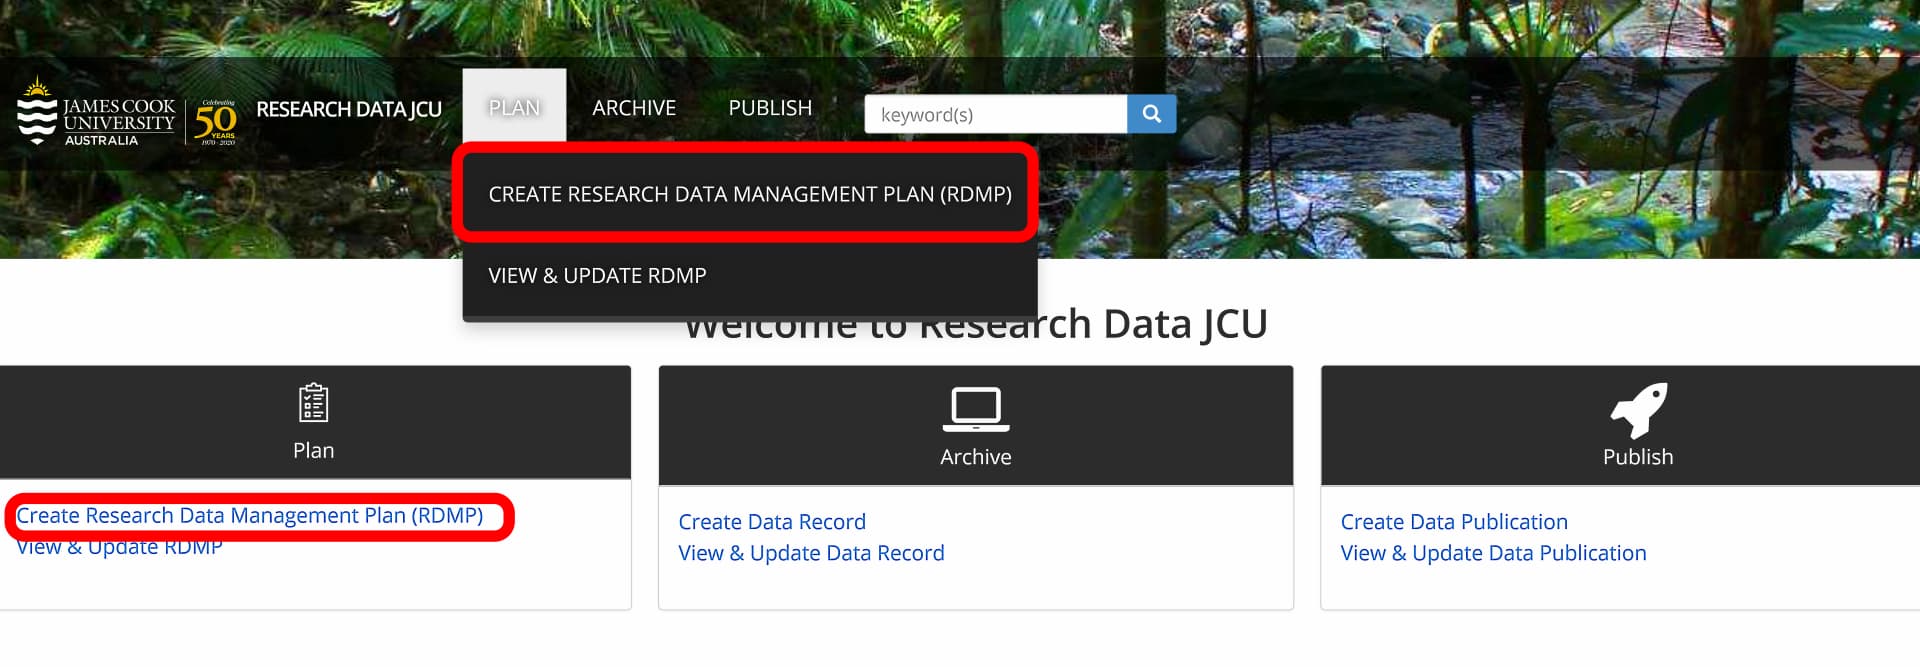 Research Data JCU screen showing RDMP options